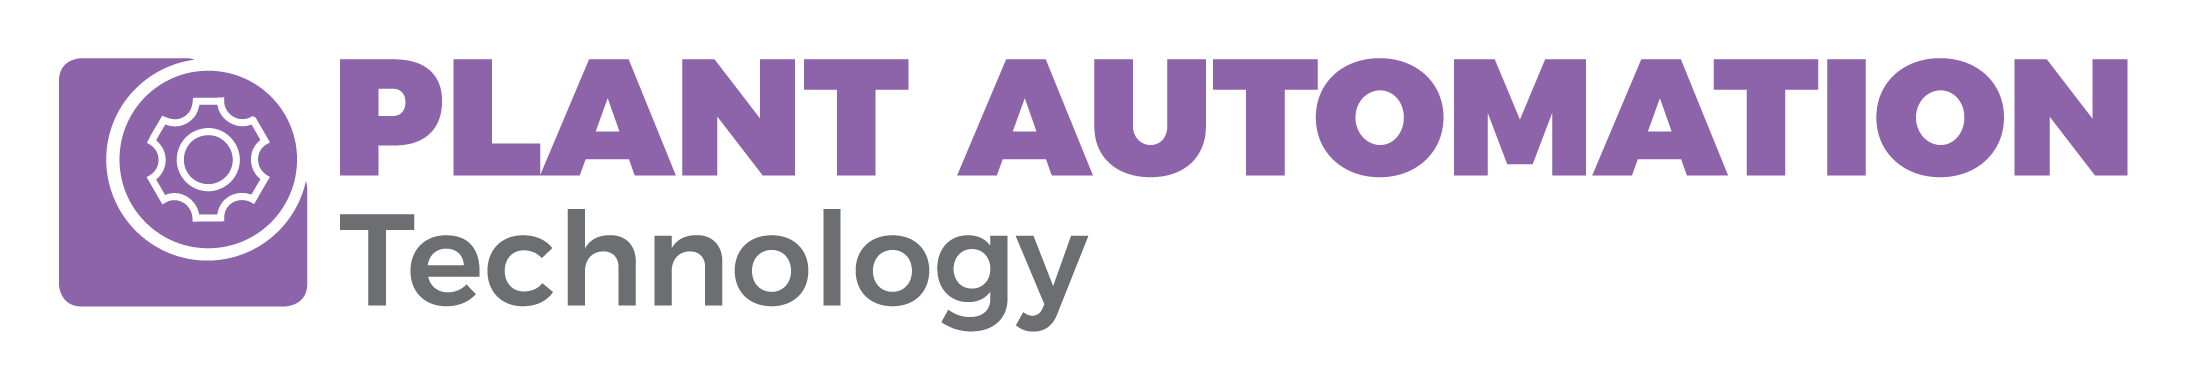 Plant Automation Technology - Logo - Big PNG